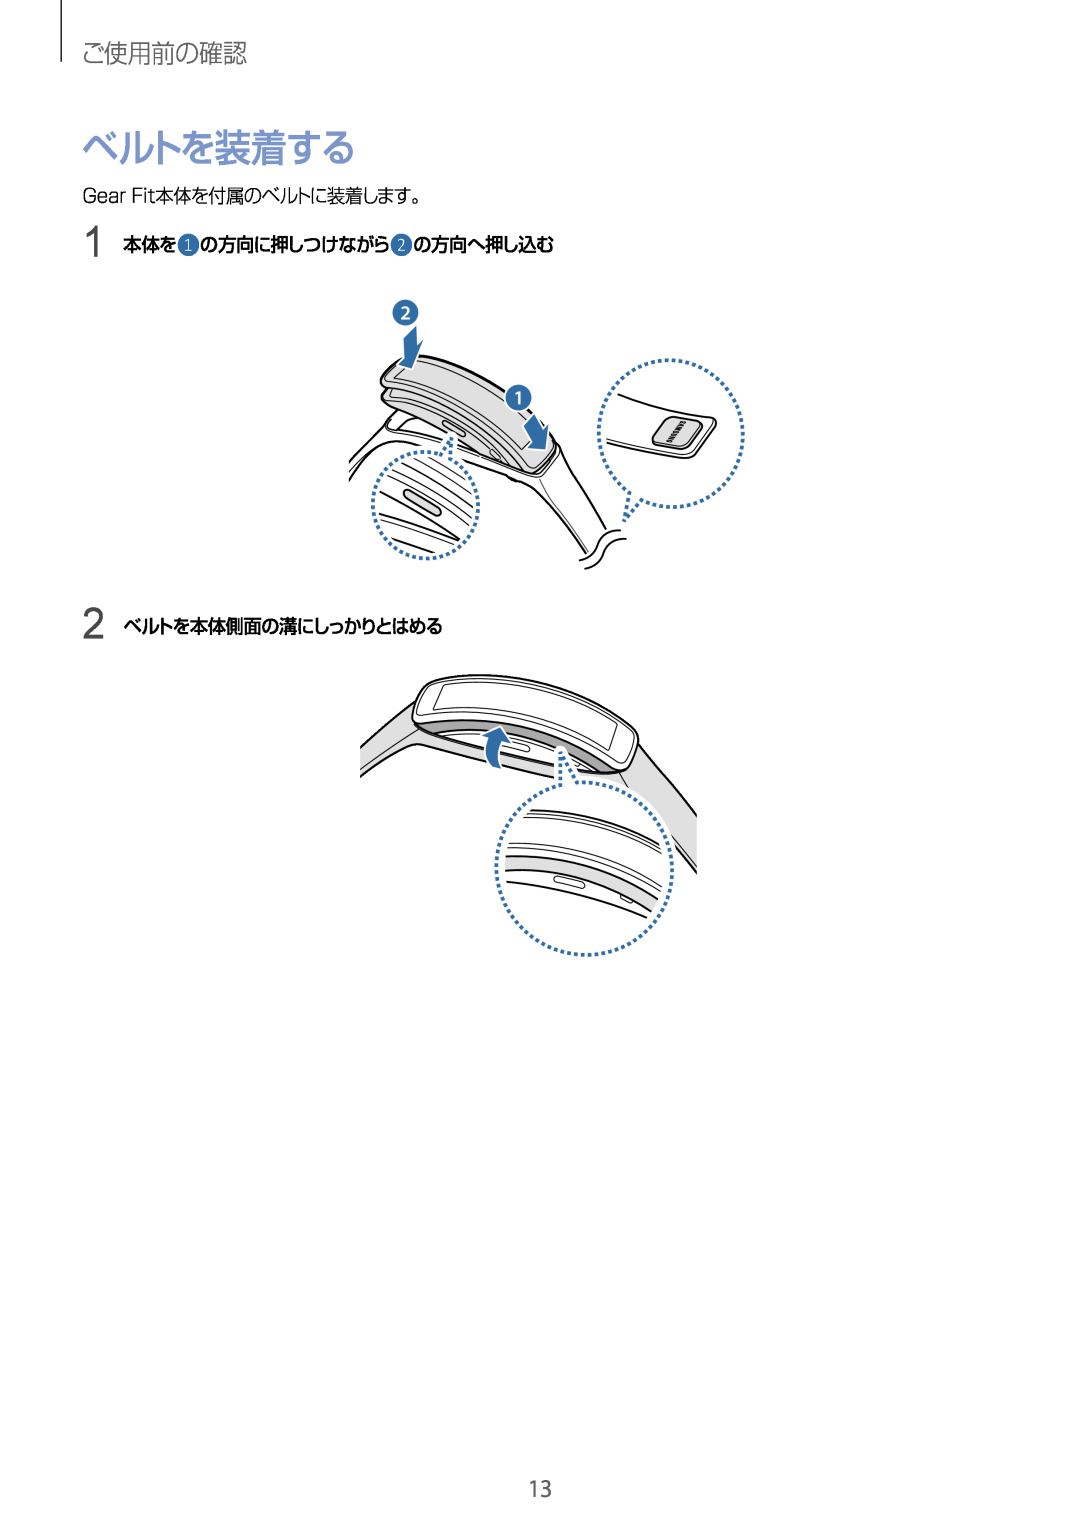 Samsung SM-R3500ZKADCM manual ベルトを装着する, ご使用前の確認, Gear Fit本体を付属のベルトに装着します。 1 本体を❶の方向に押しつけながら❷の方向へ押し込む, 2 ベルトを本体側面の溝にしっかりとはめる 